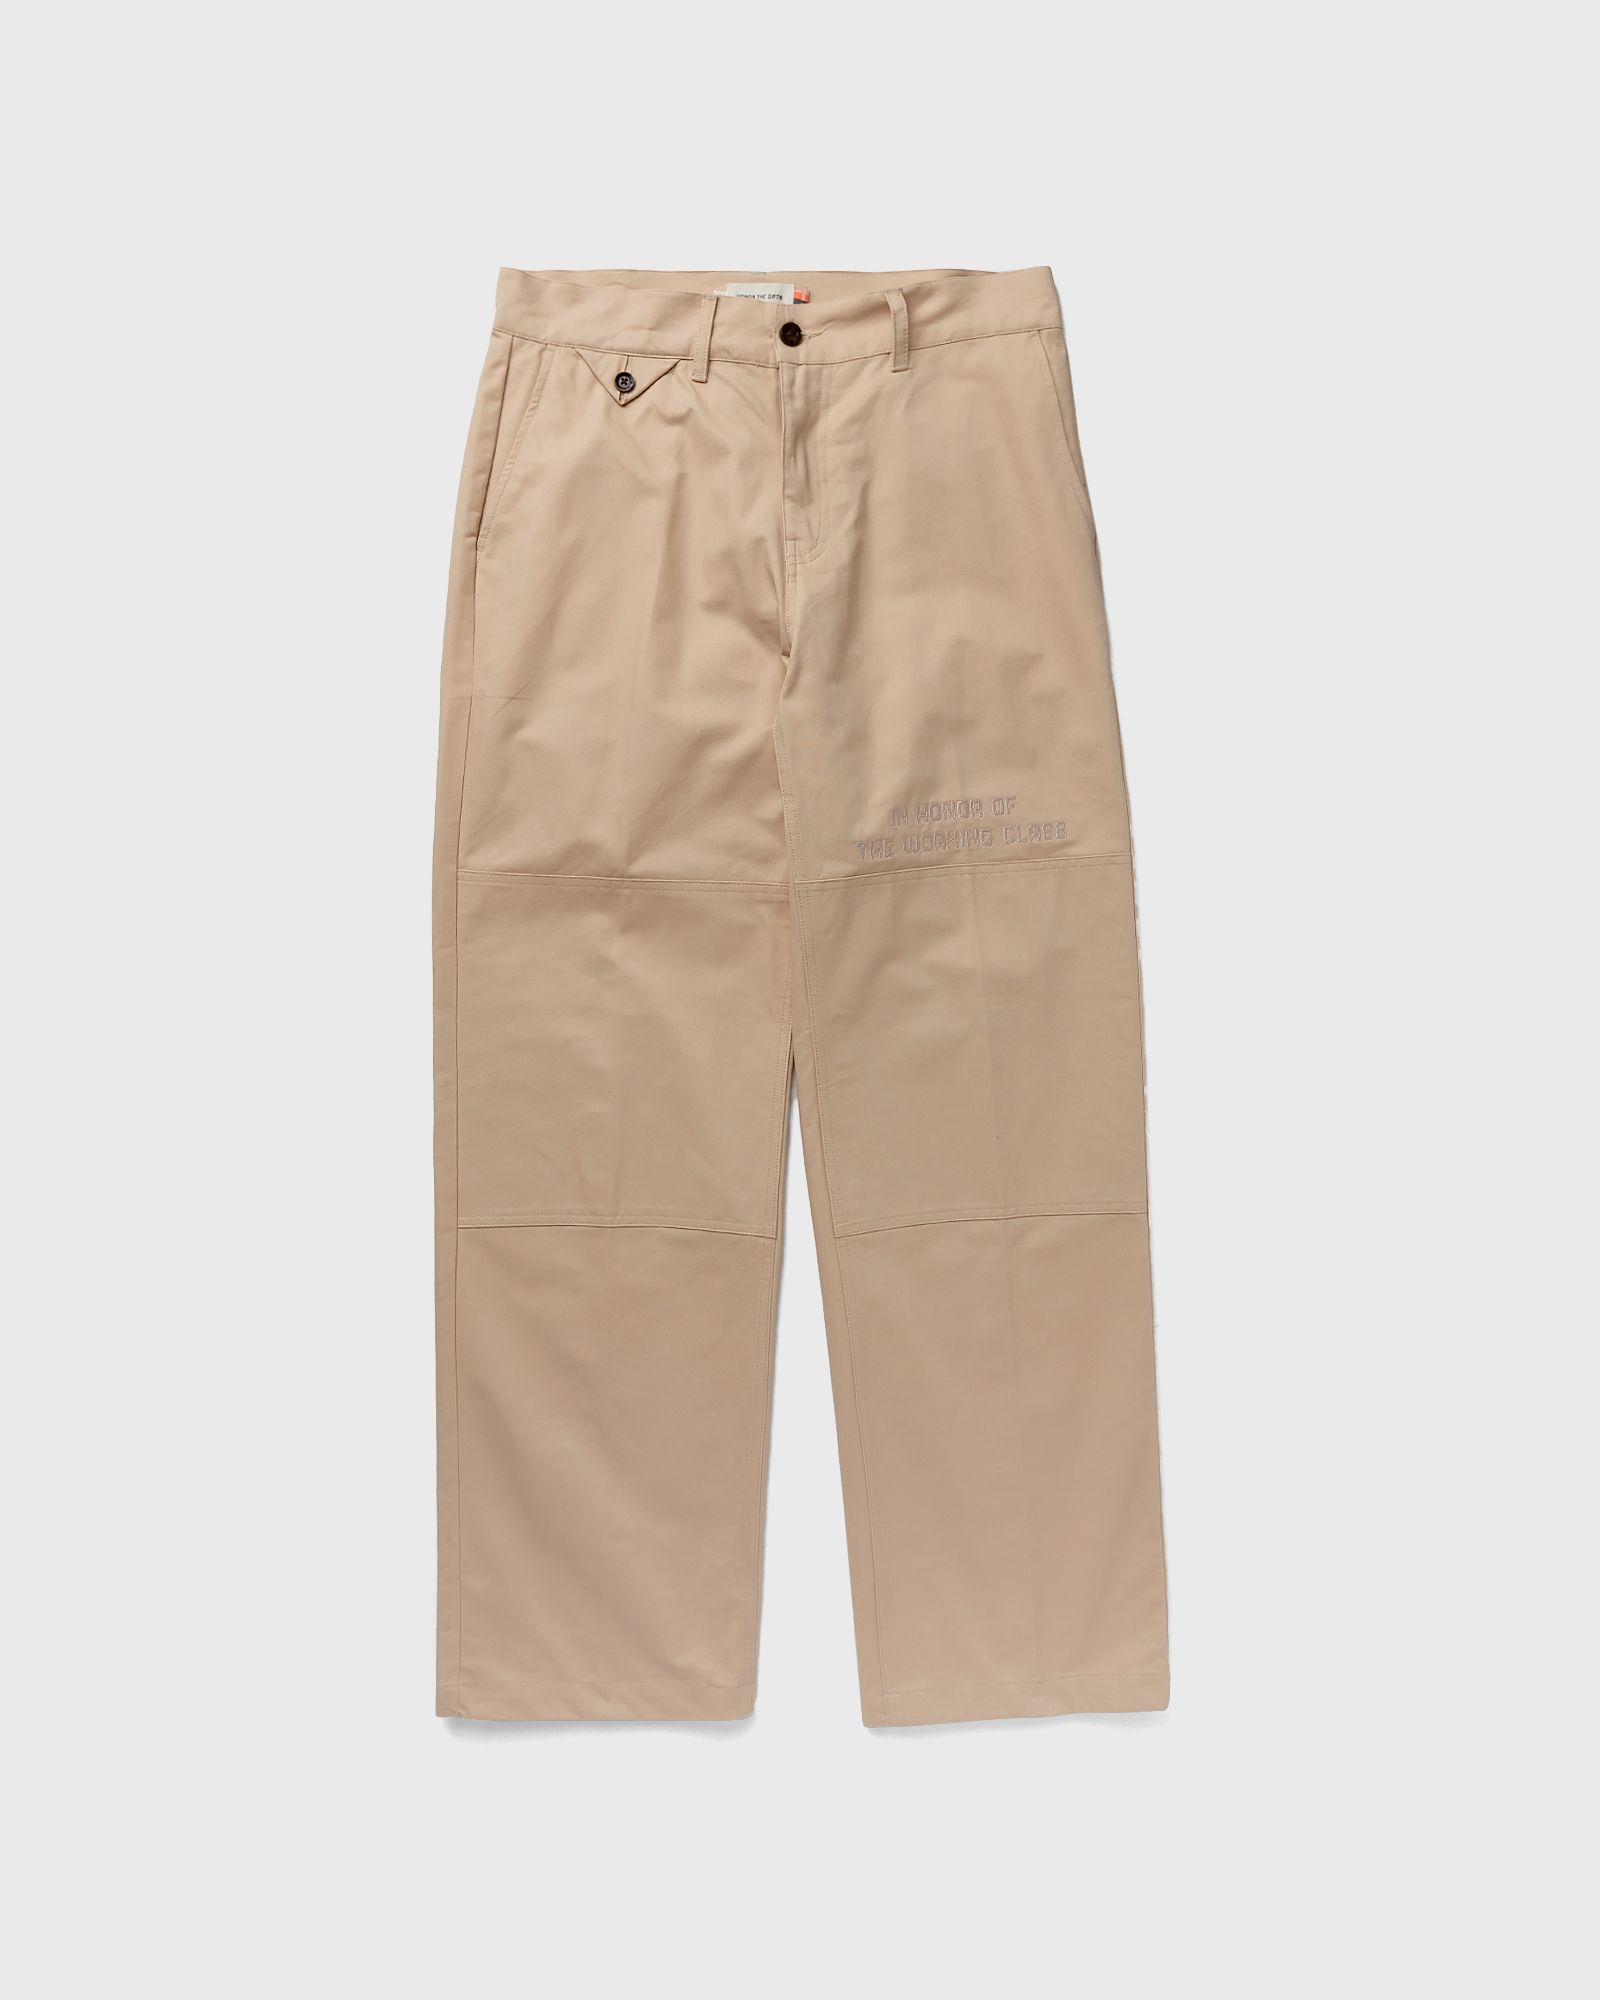 Honor The Gift - htg shop pant men casual pants beige in größe:xxl